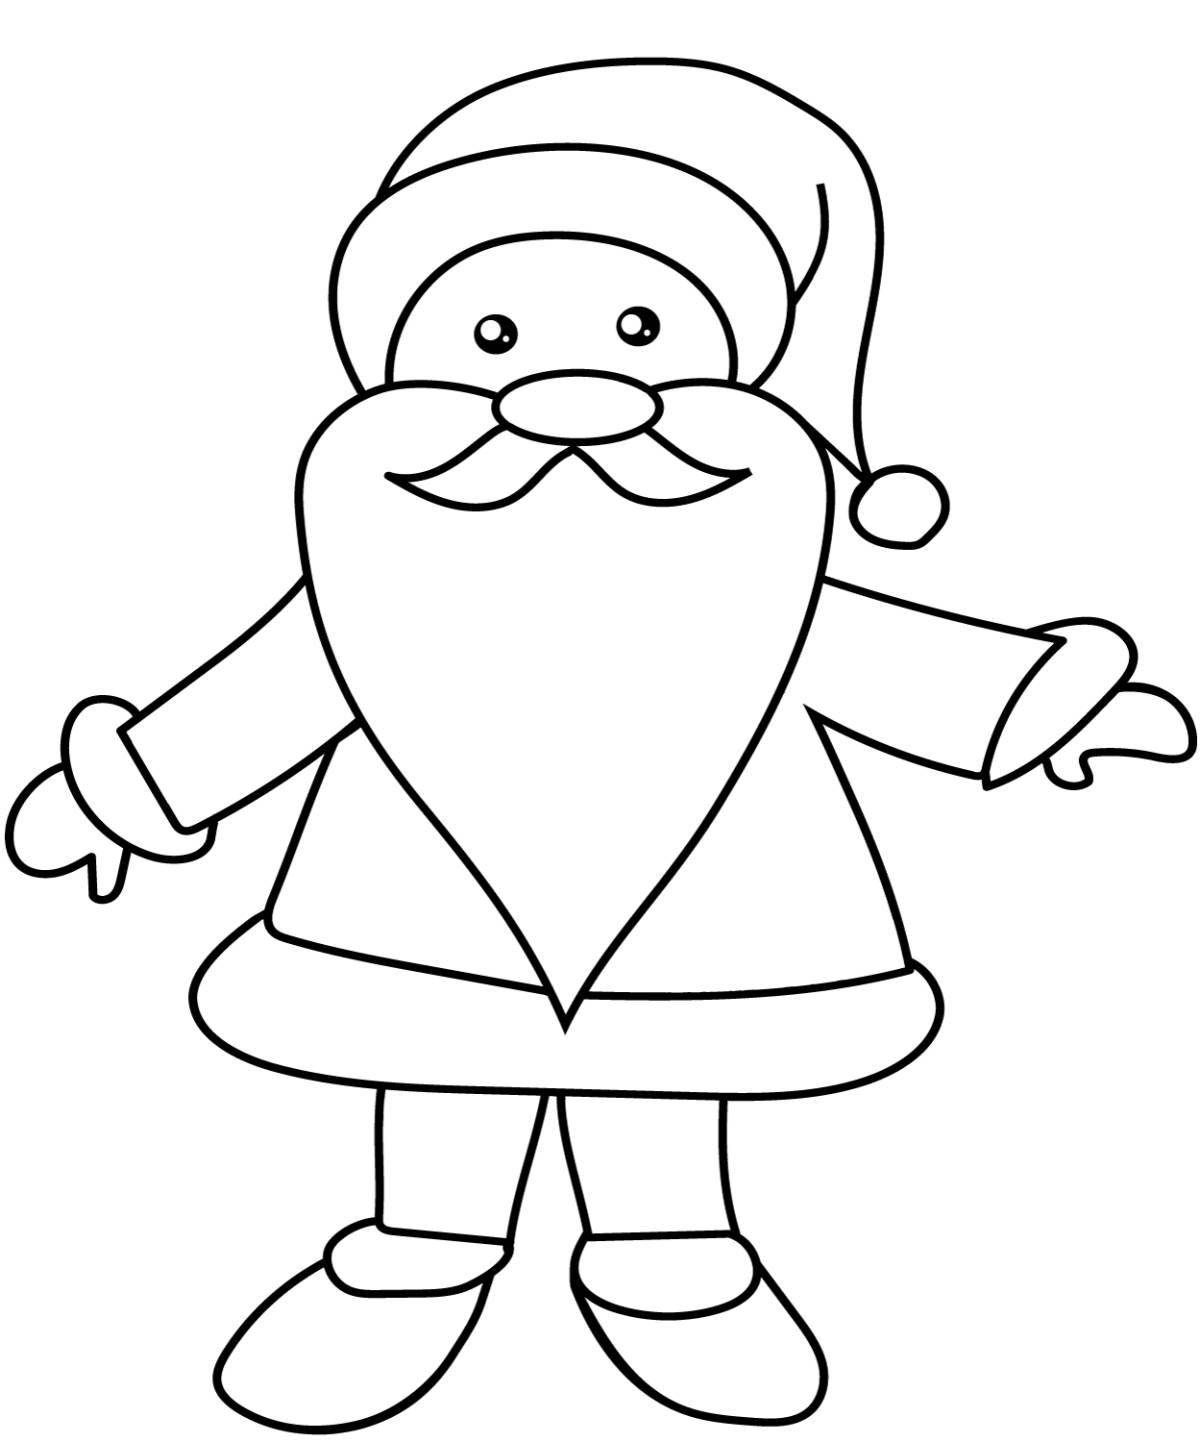 Animated santa claus coloring page